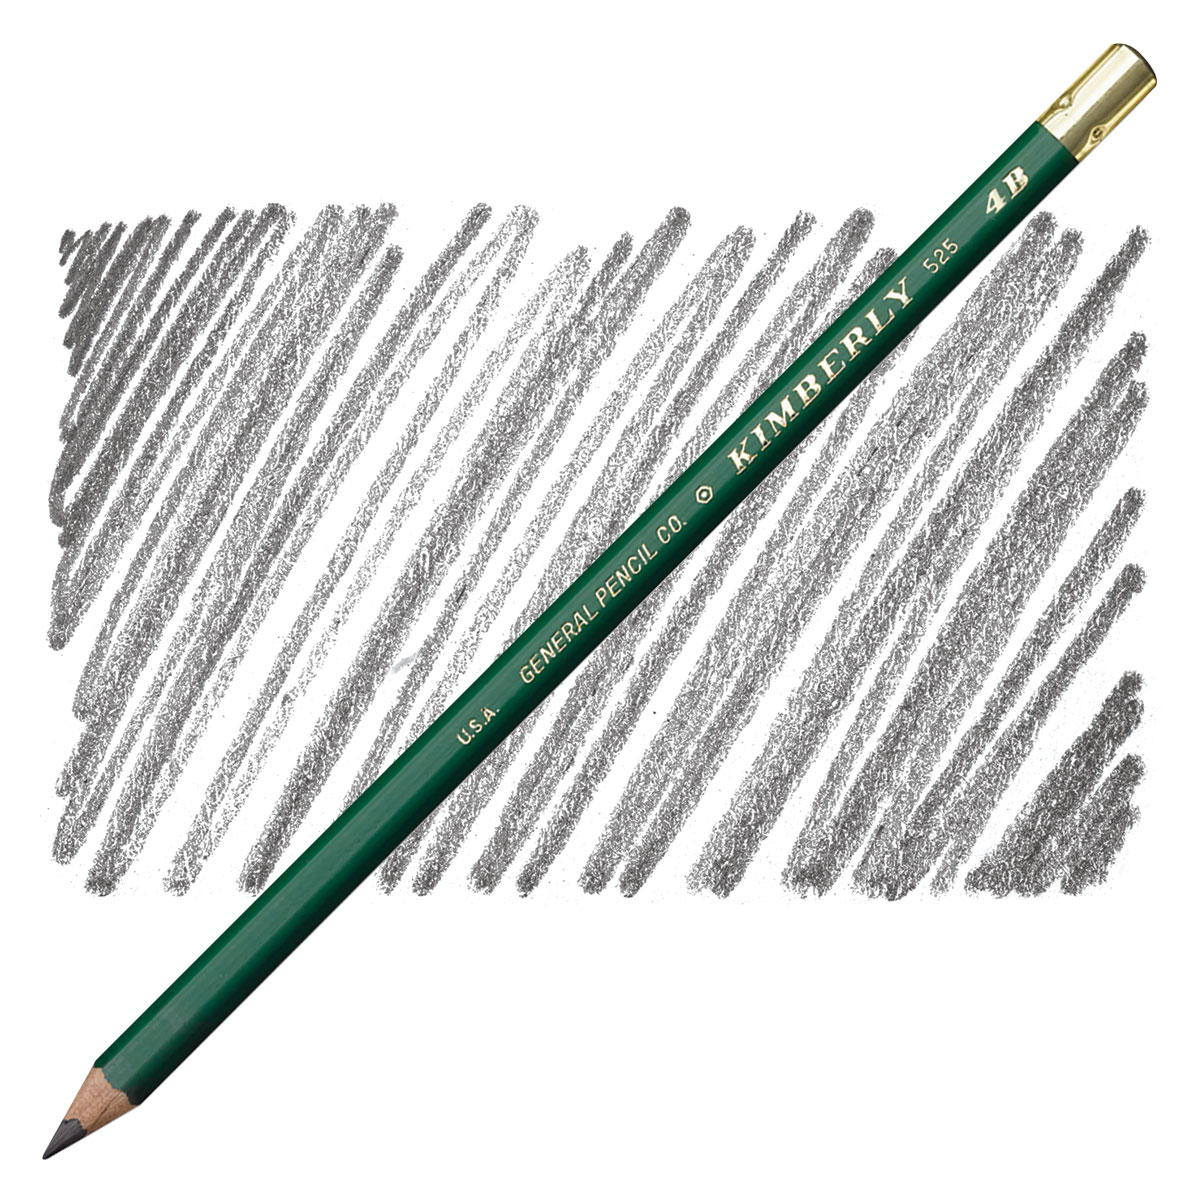 General's Kimberly Graphite #525 Pencil 6B